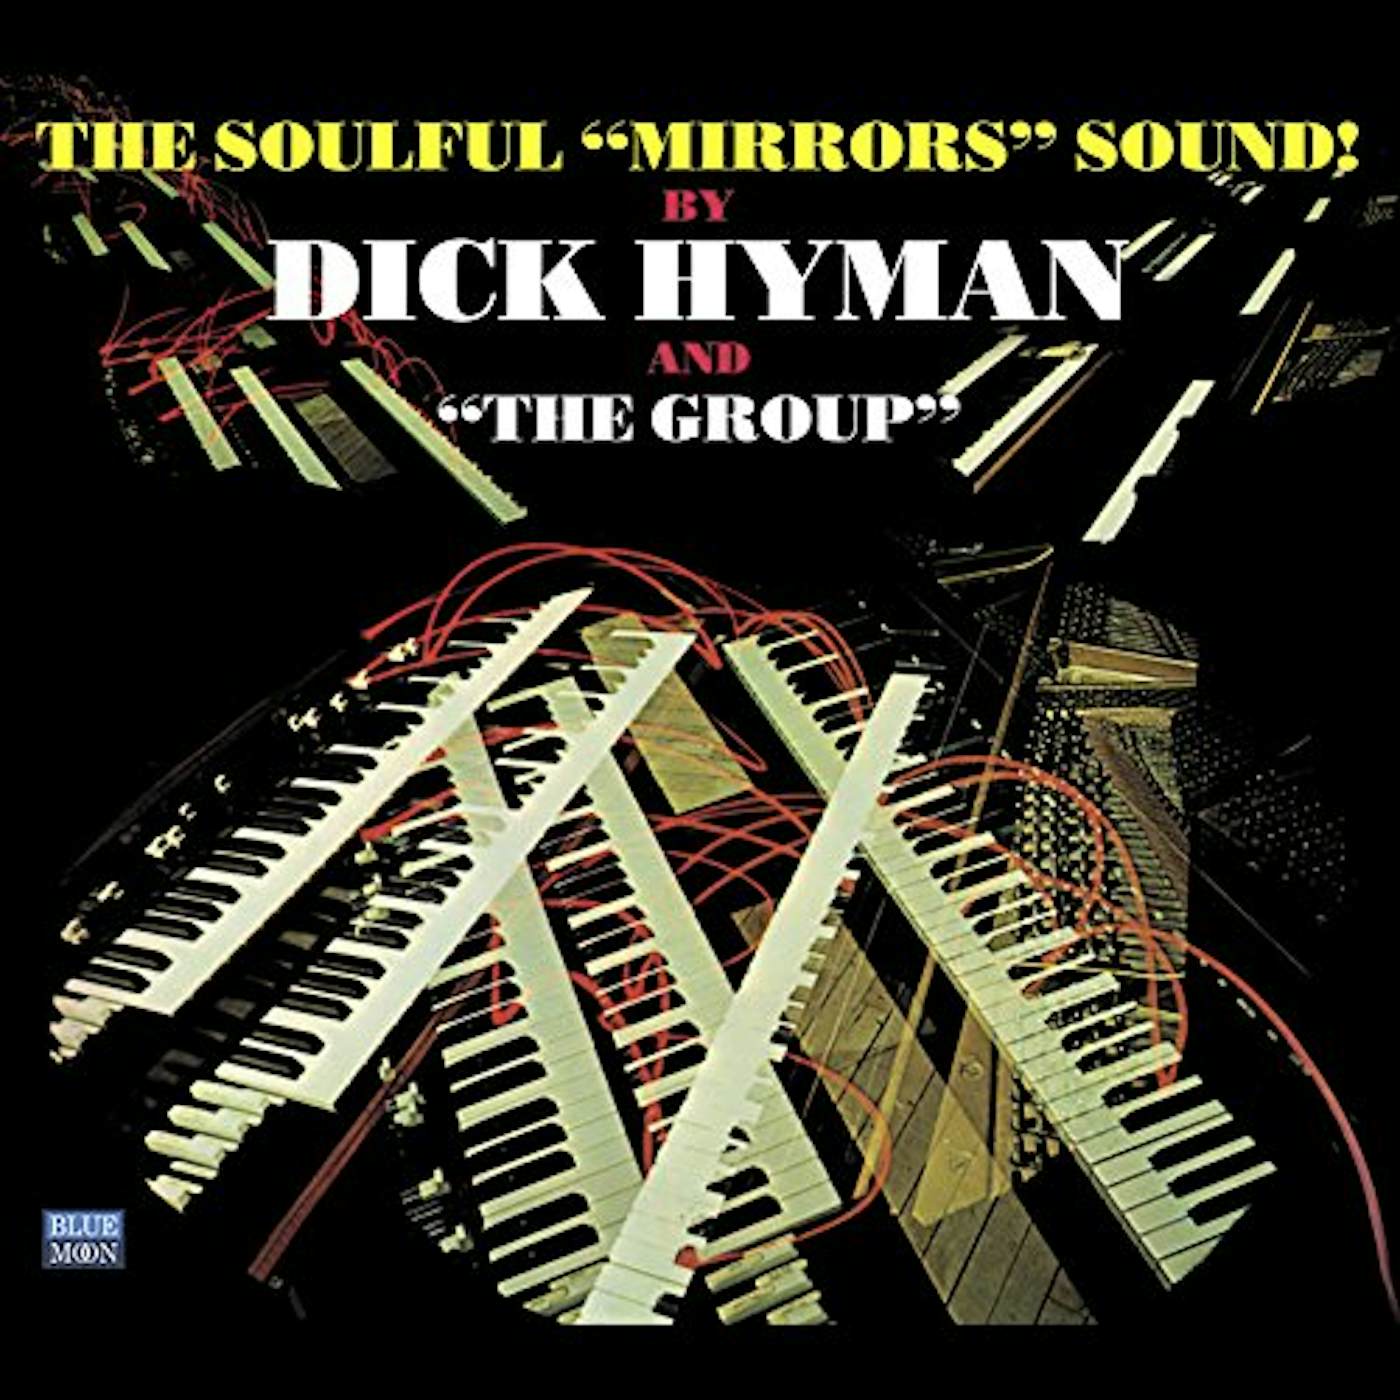 Dick Hyman SOULFUL MIRROR SOUND CD